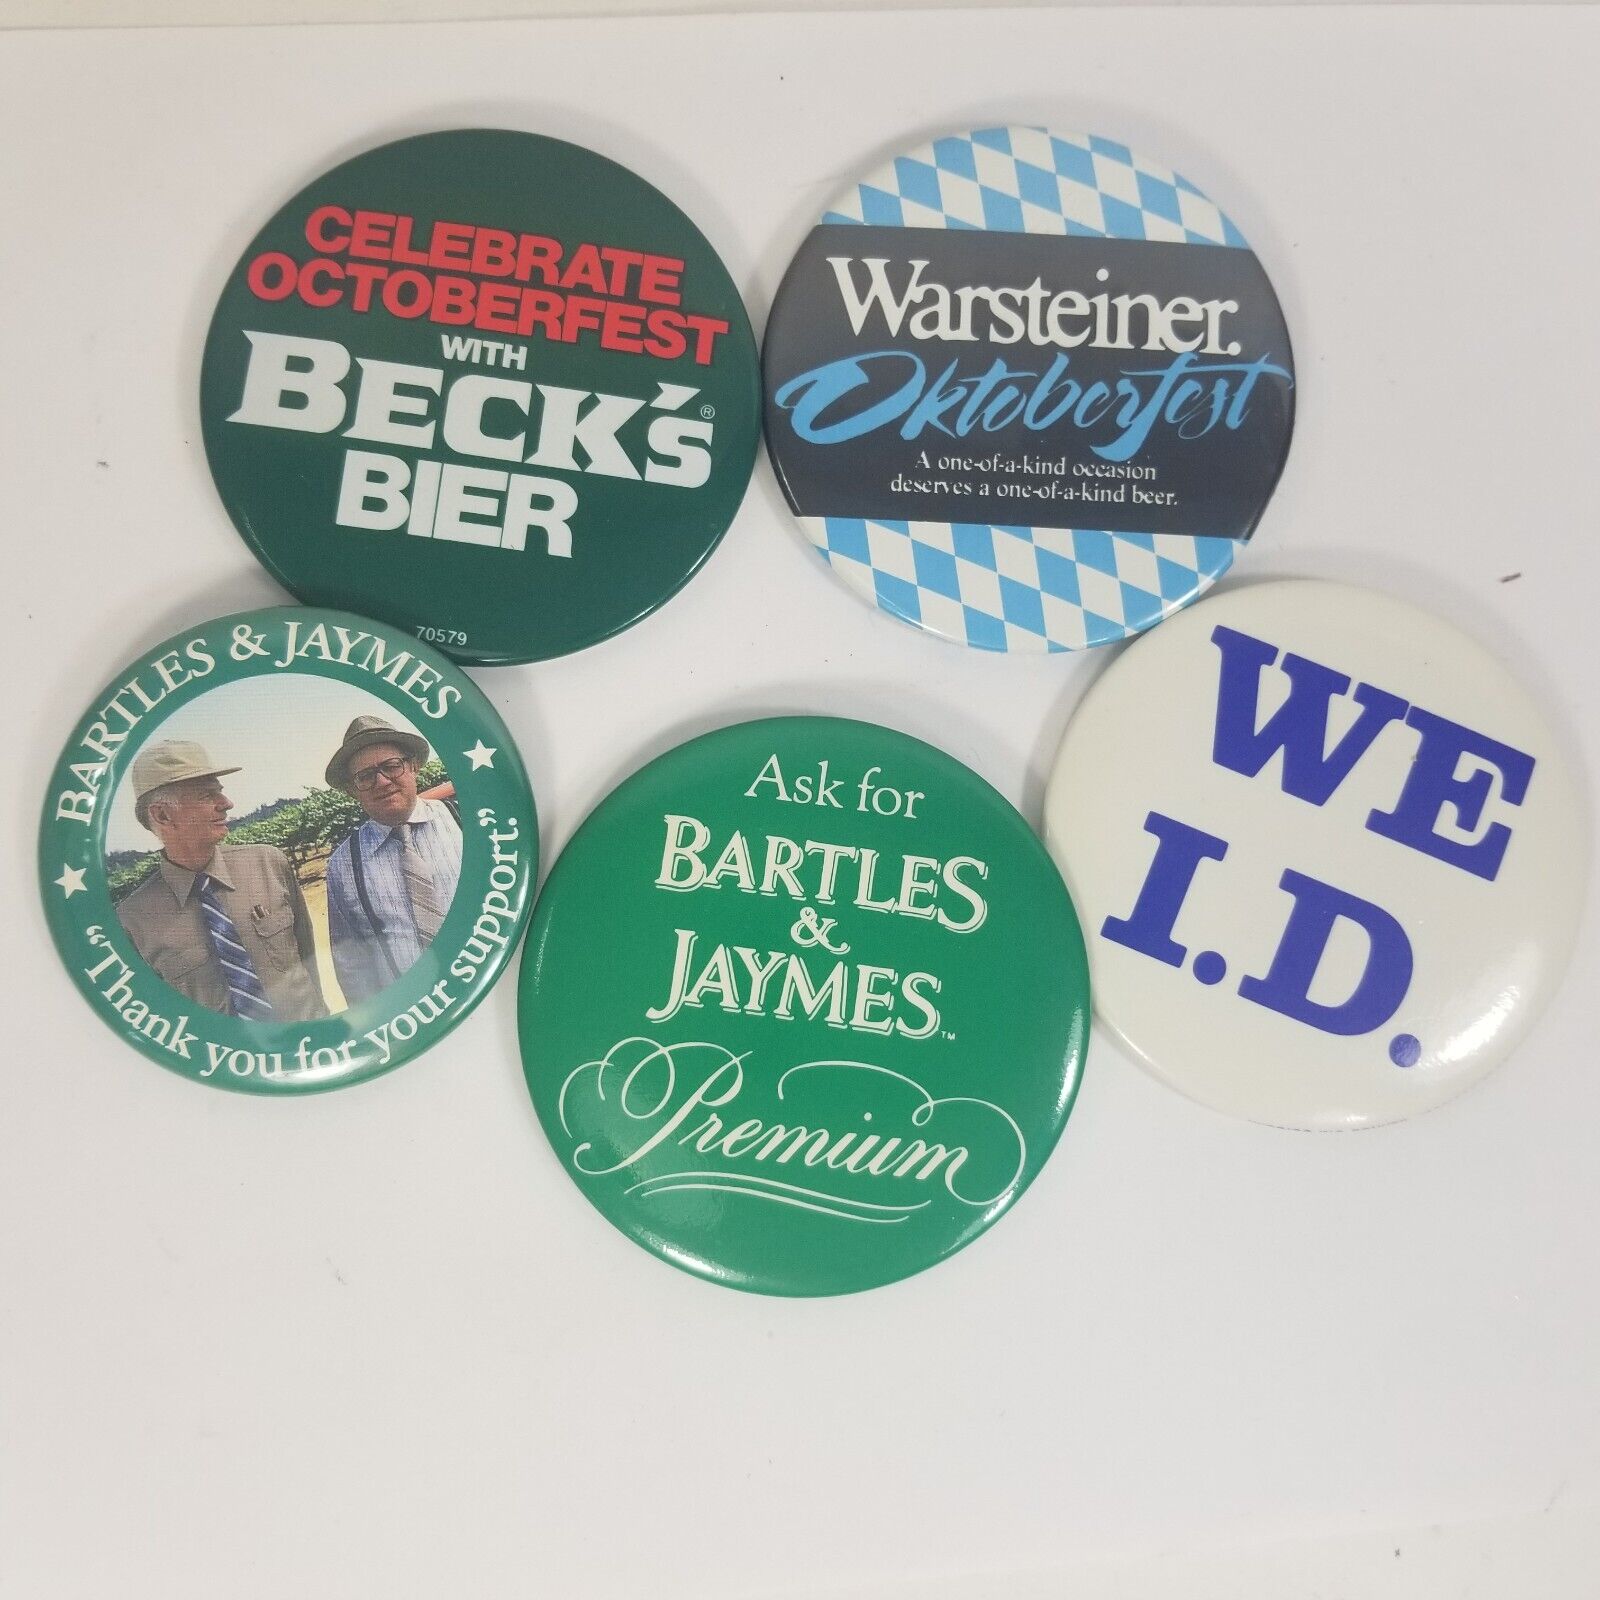 Vintage 90s Pins Button Bartles Jaymes Beck\'s Bier oktoberfest Warsteiner We ID